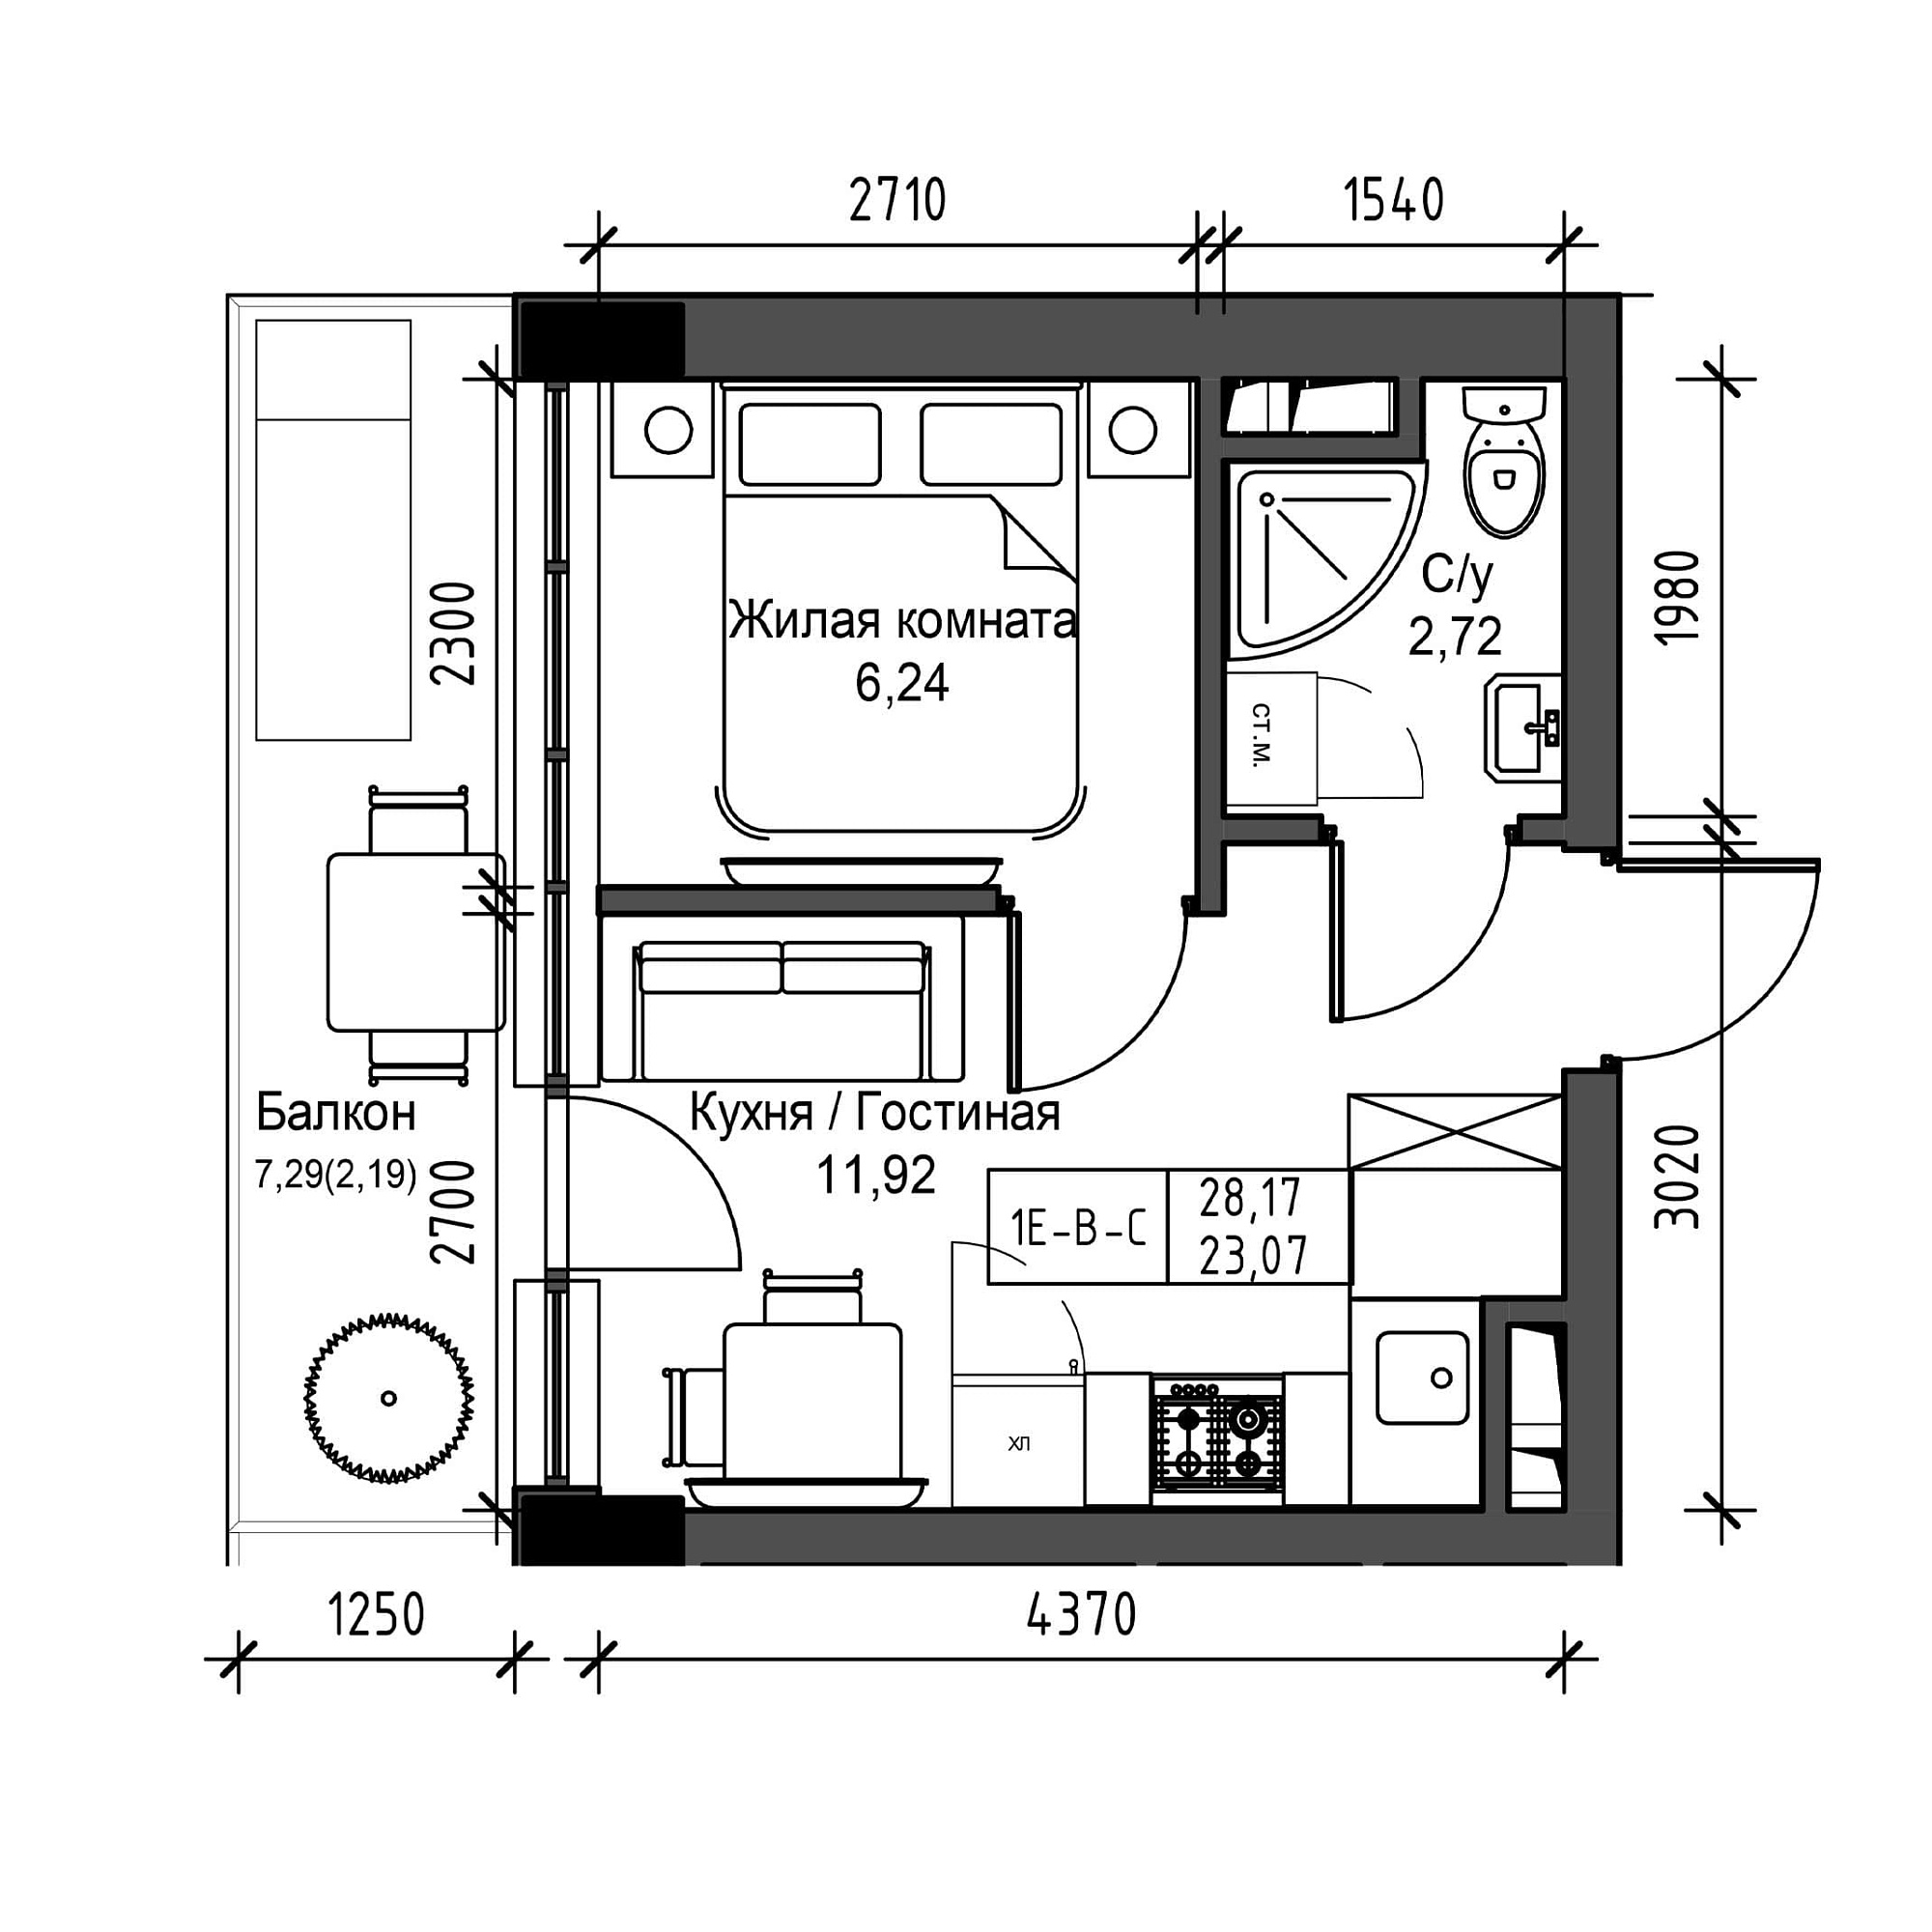 Планування 1-к квартира площею 23.07м2, UM-001-04/0013.